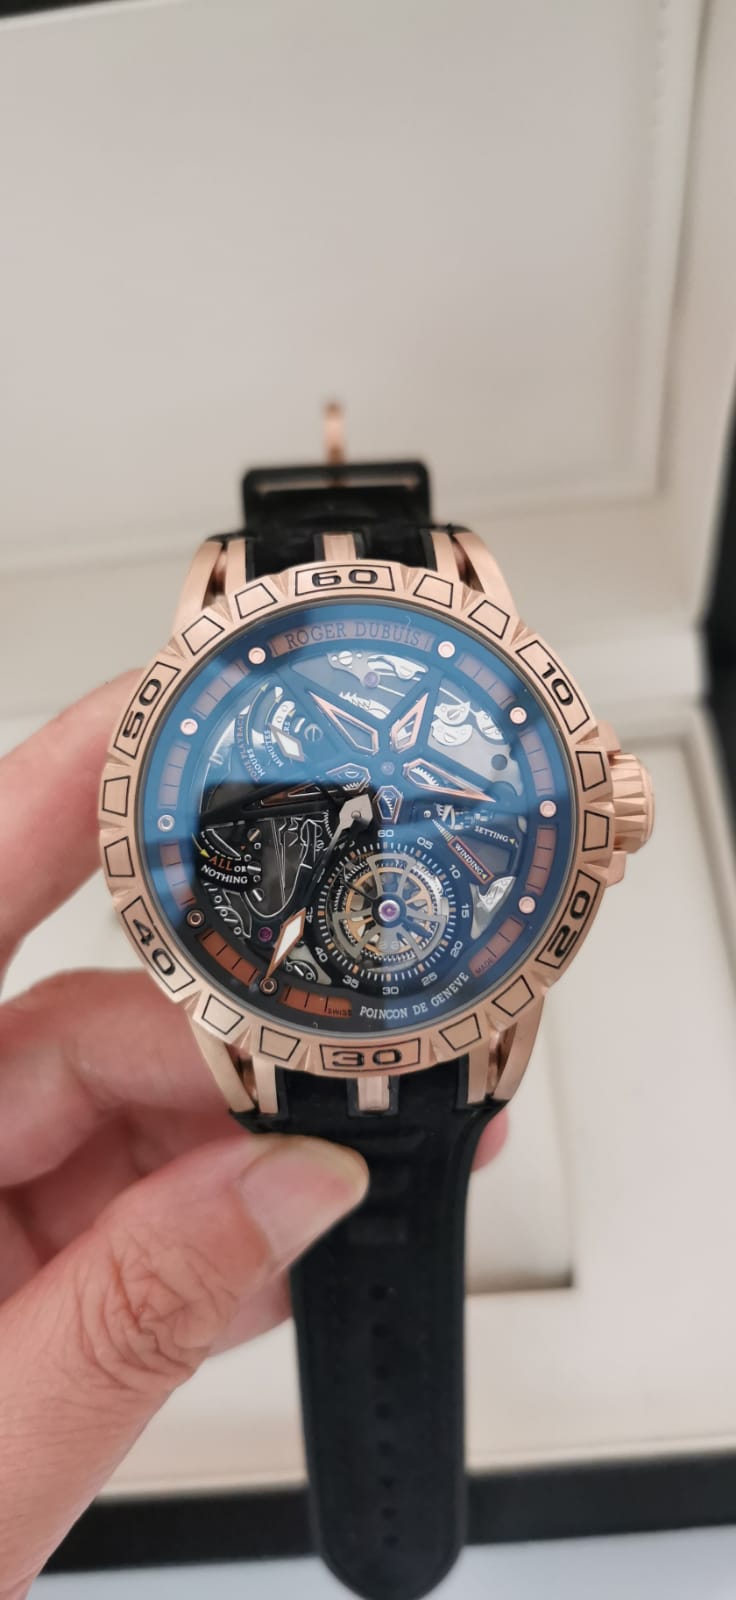 Zoom Relógio Roger Dubuis